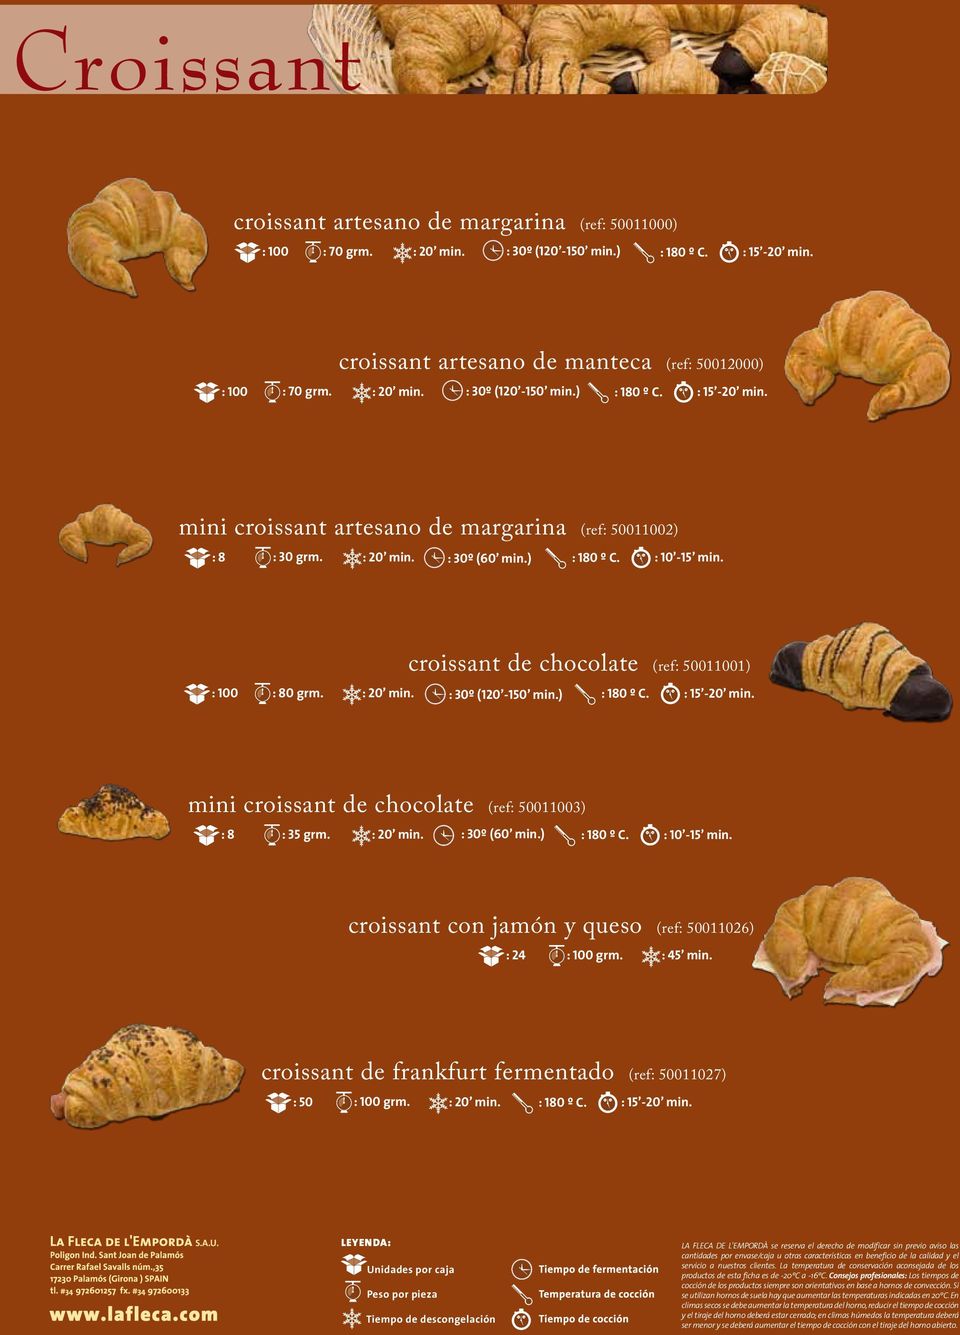 mini croissant de chocolate (ref: 50011003) : 8 : 35 grm. : 20 min. : 30º (60 min.) : 180 º C. : 10-15 min. croissant con jamón y queso (ref: 50011026) : 24 : 100 grm. : 45 min.